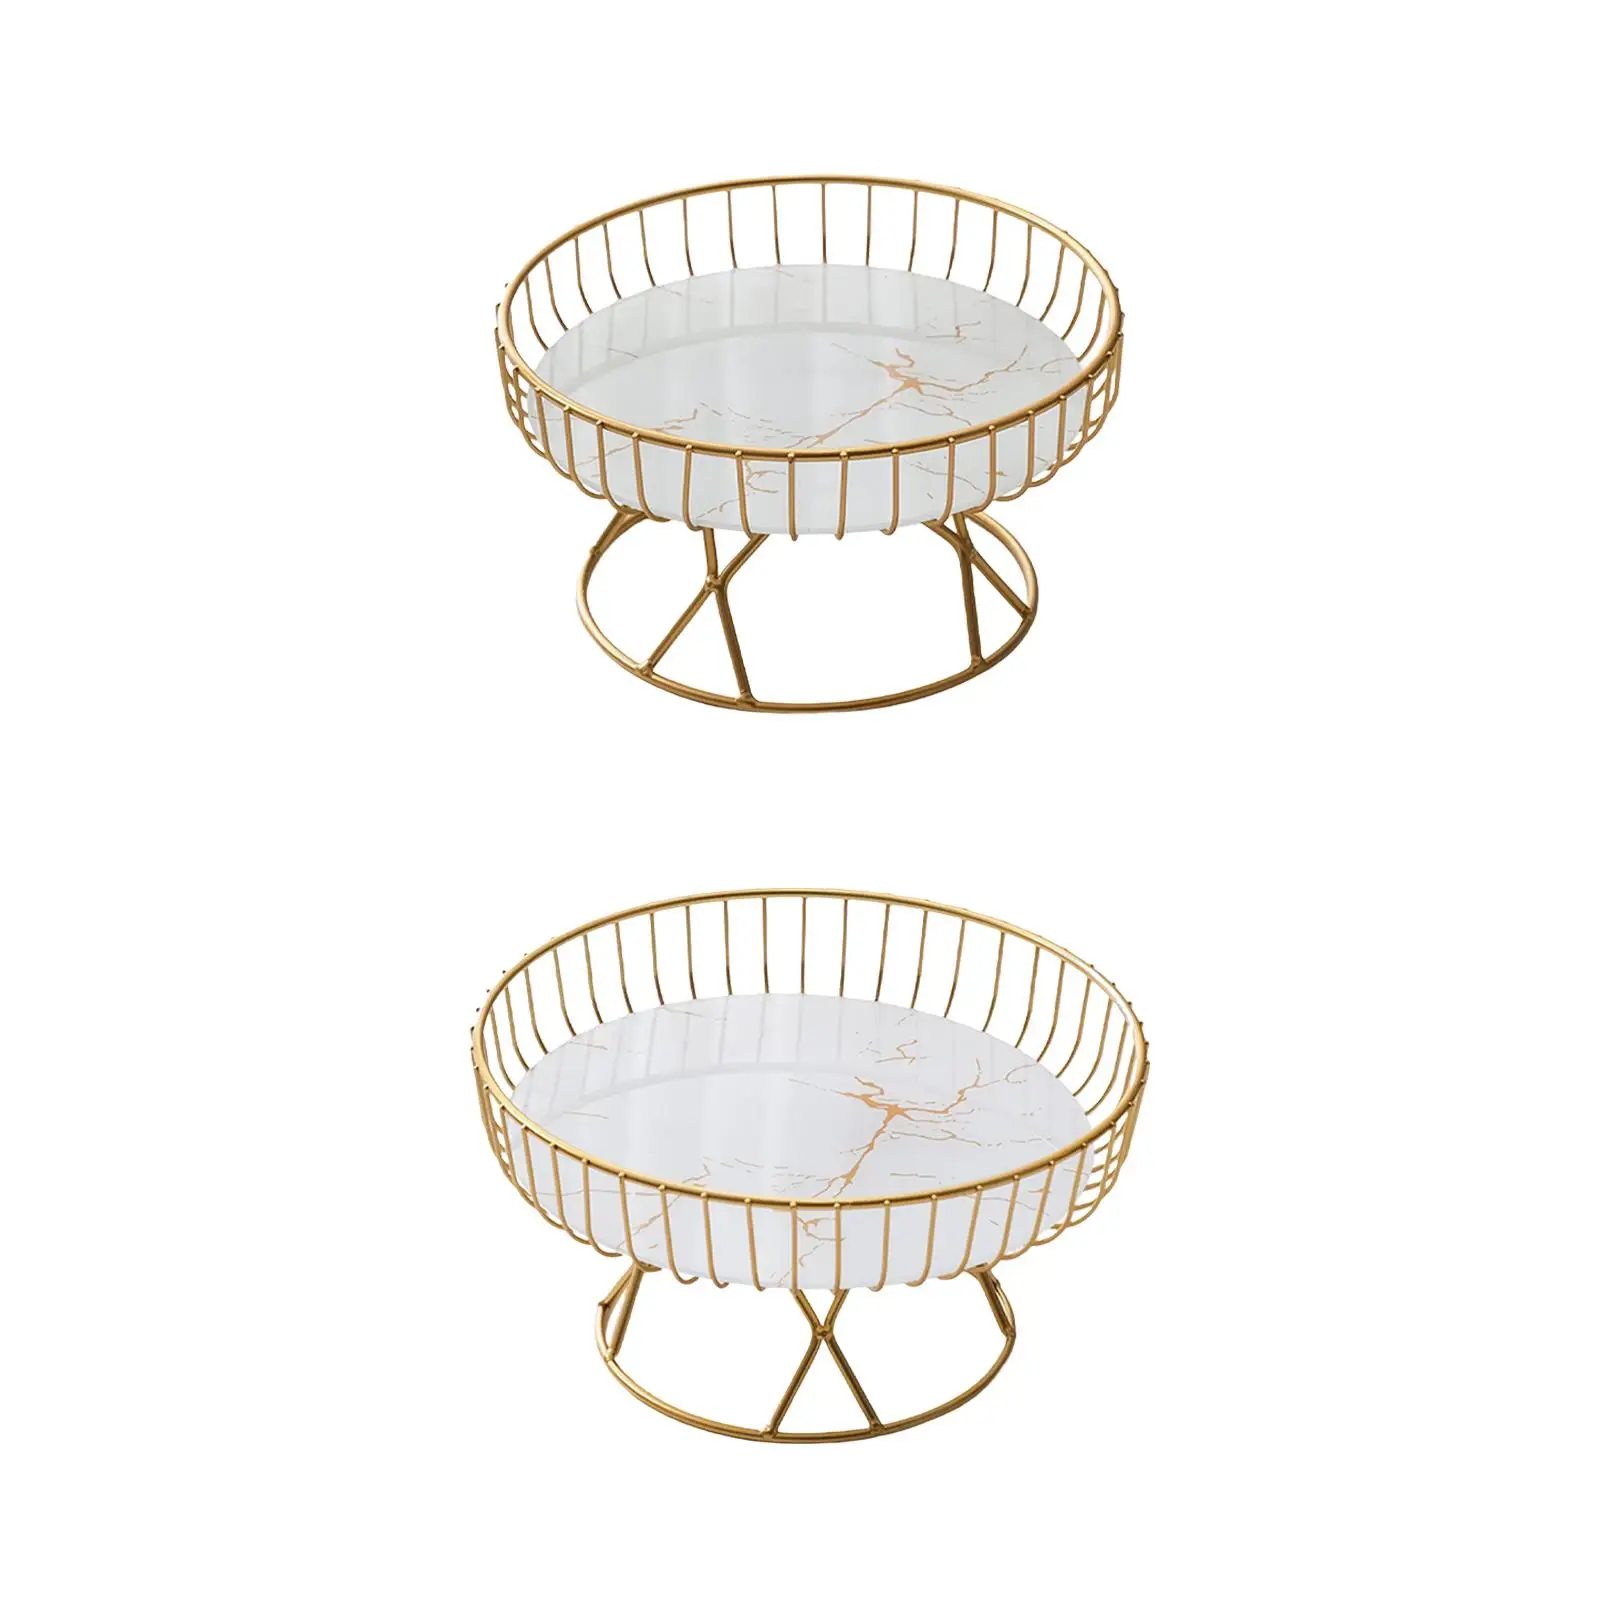 Golden Metal Iron Wire Round Fruit Basket Bowl Table Centerpiece Decorative